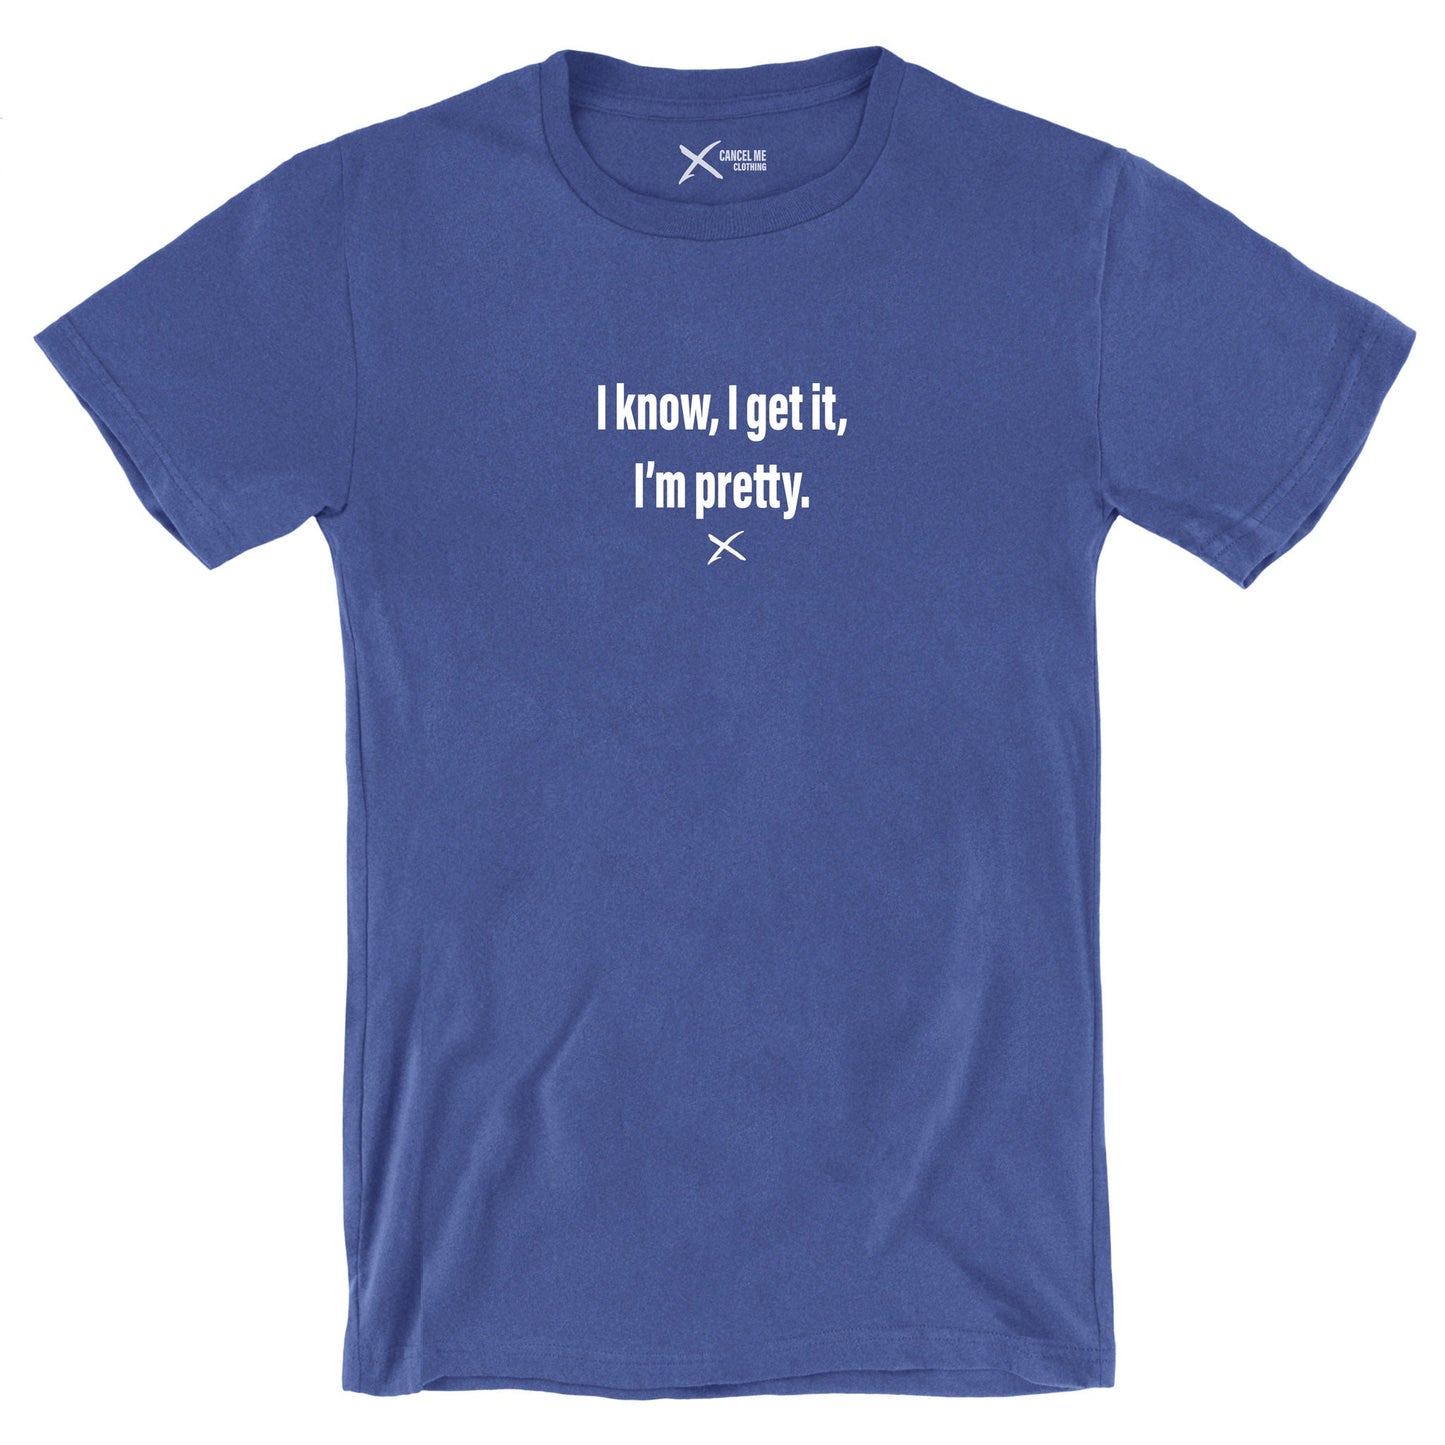 I know, I get it, I'm pretty. - Shirt